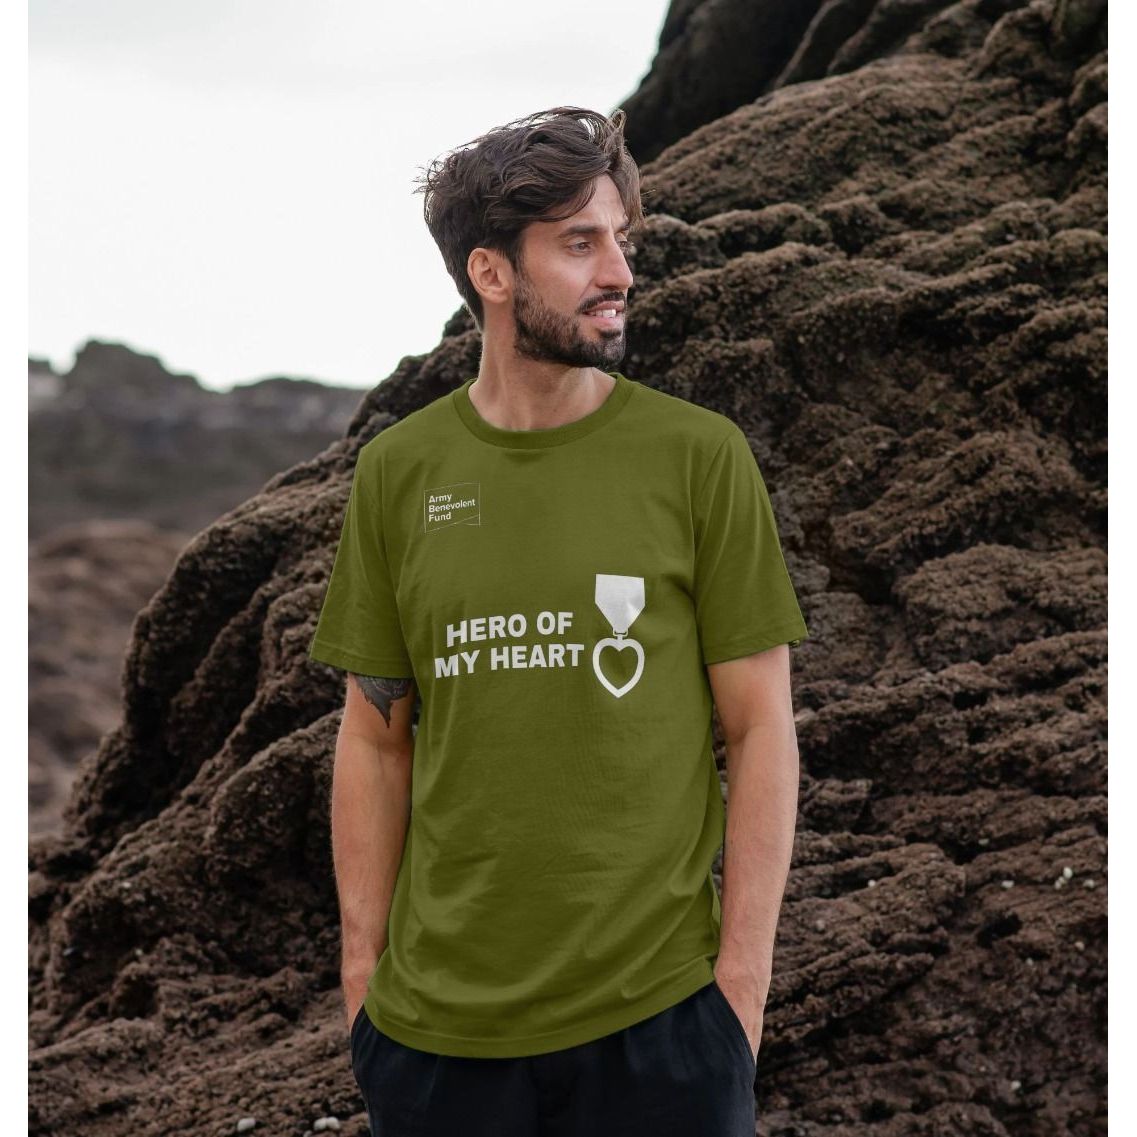 Hero of my heart T-shirt - Army Benevolent Fund